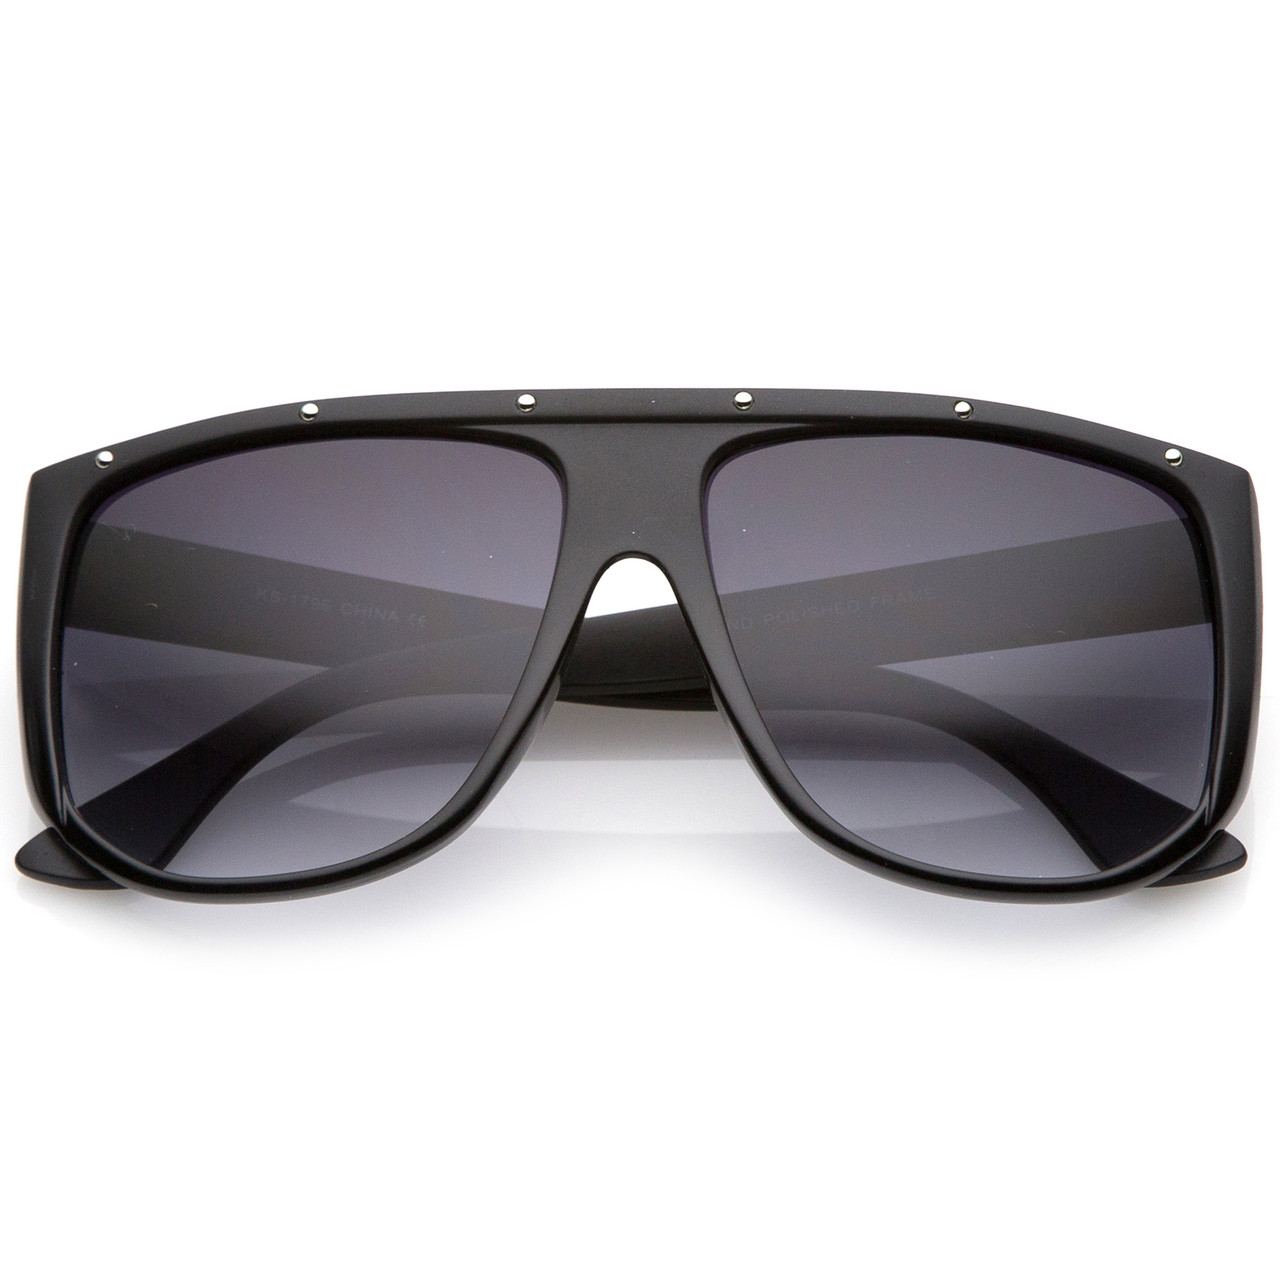 Men's Flat Top Sunglasses